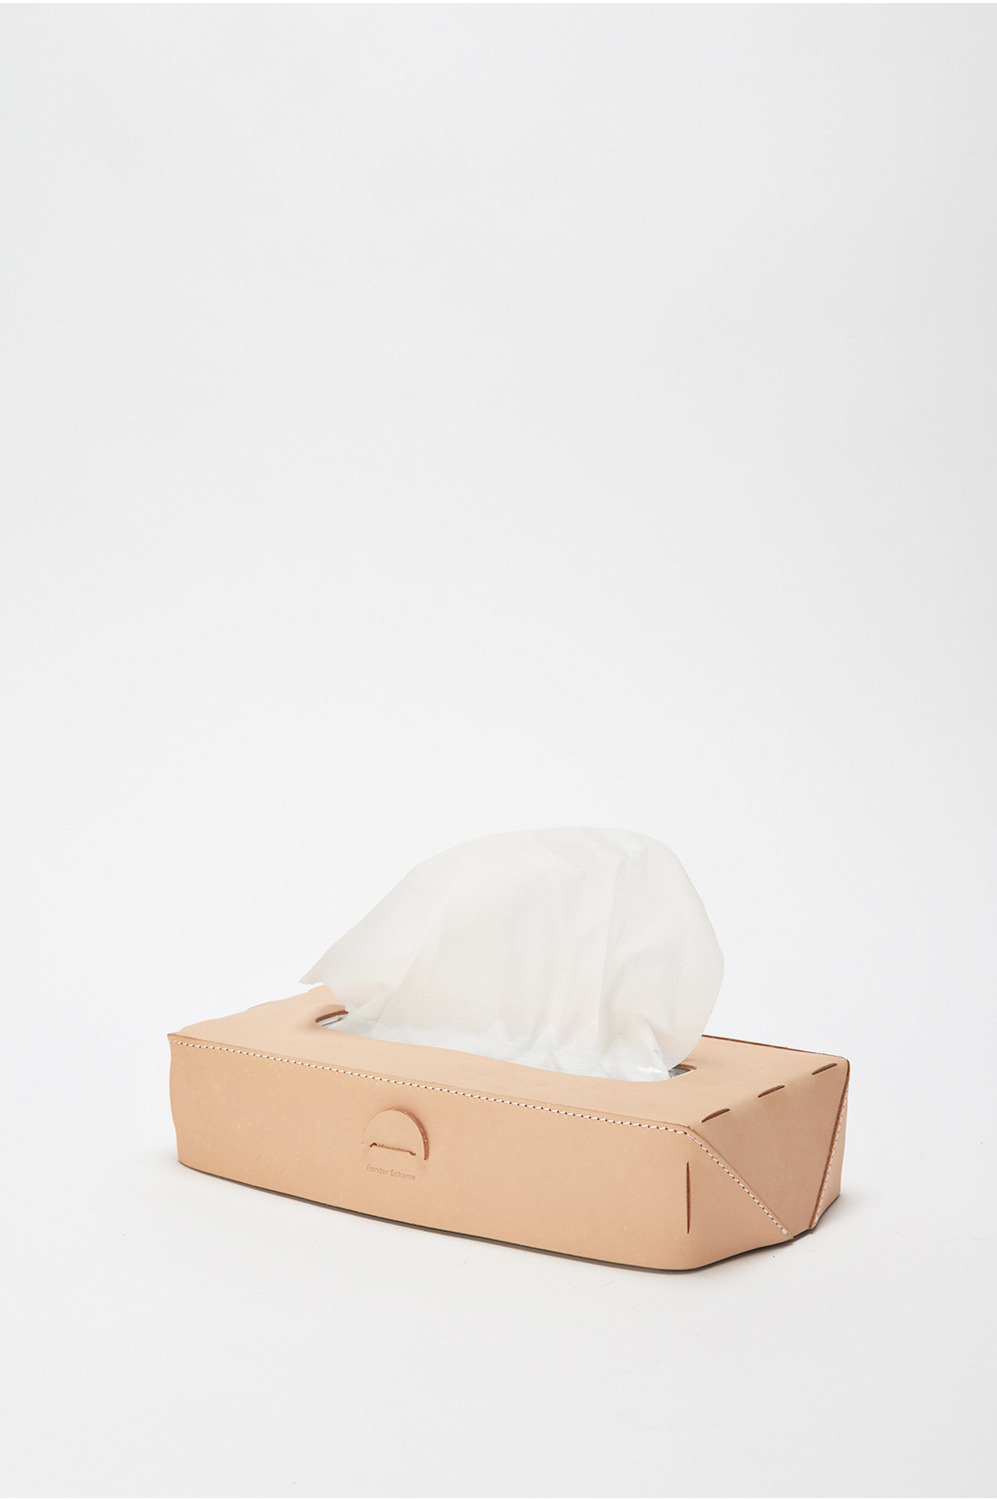 tissue box case 詳細画像 1